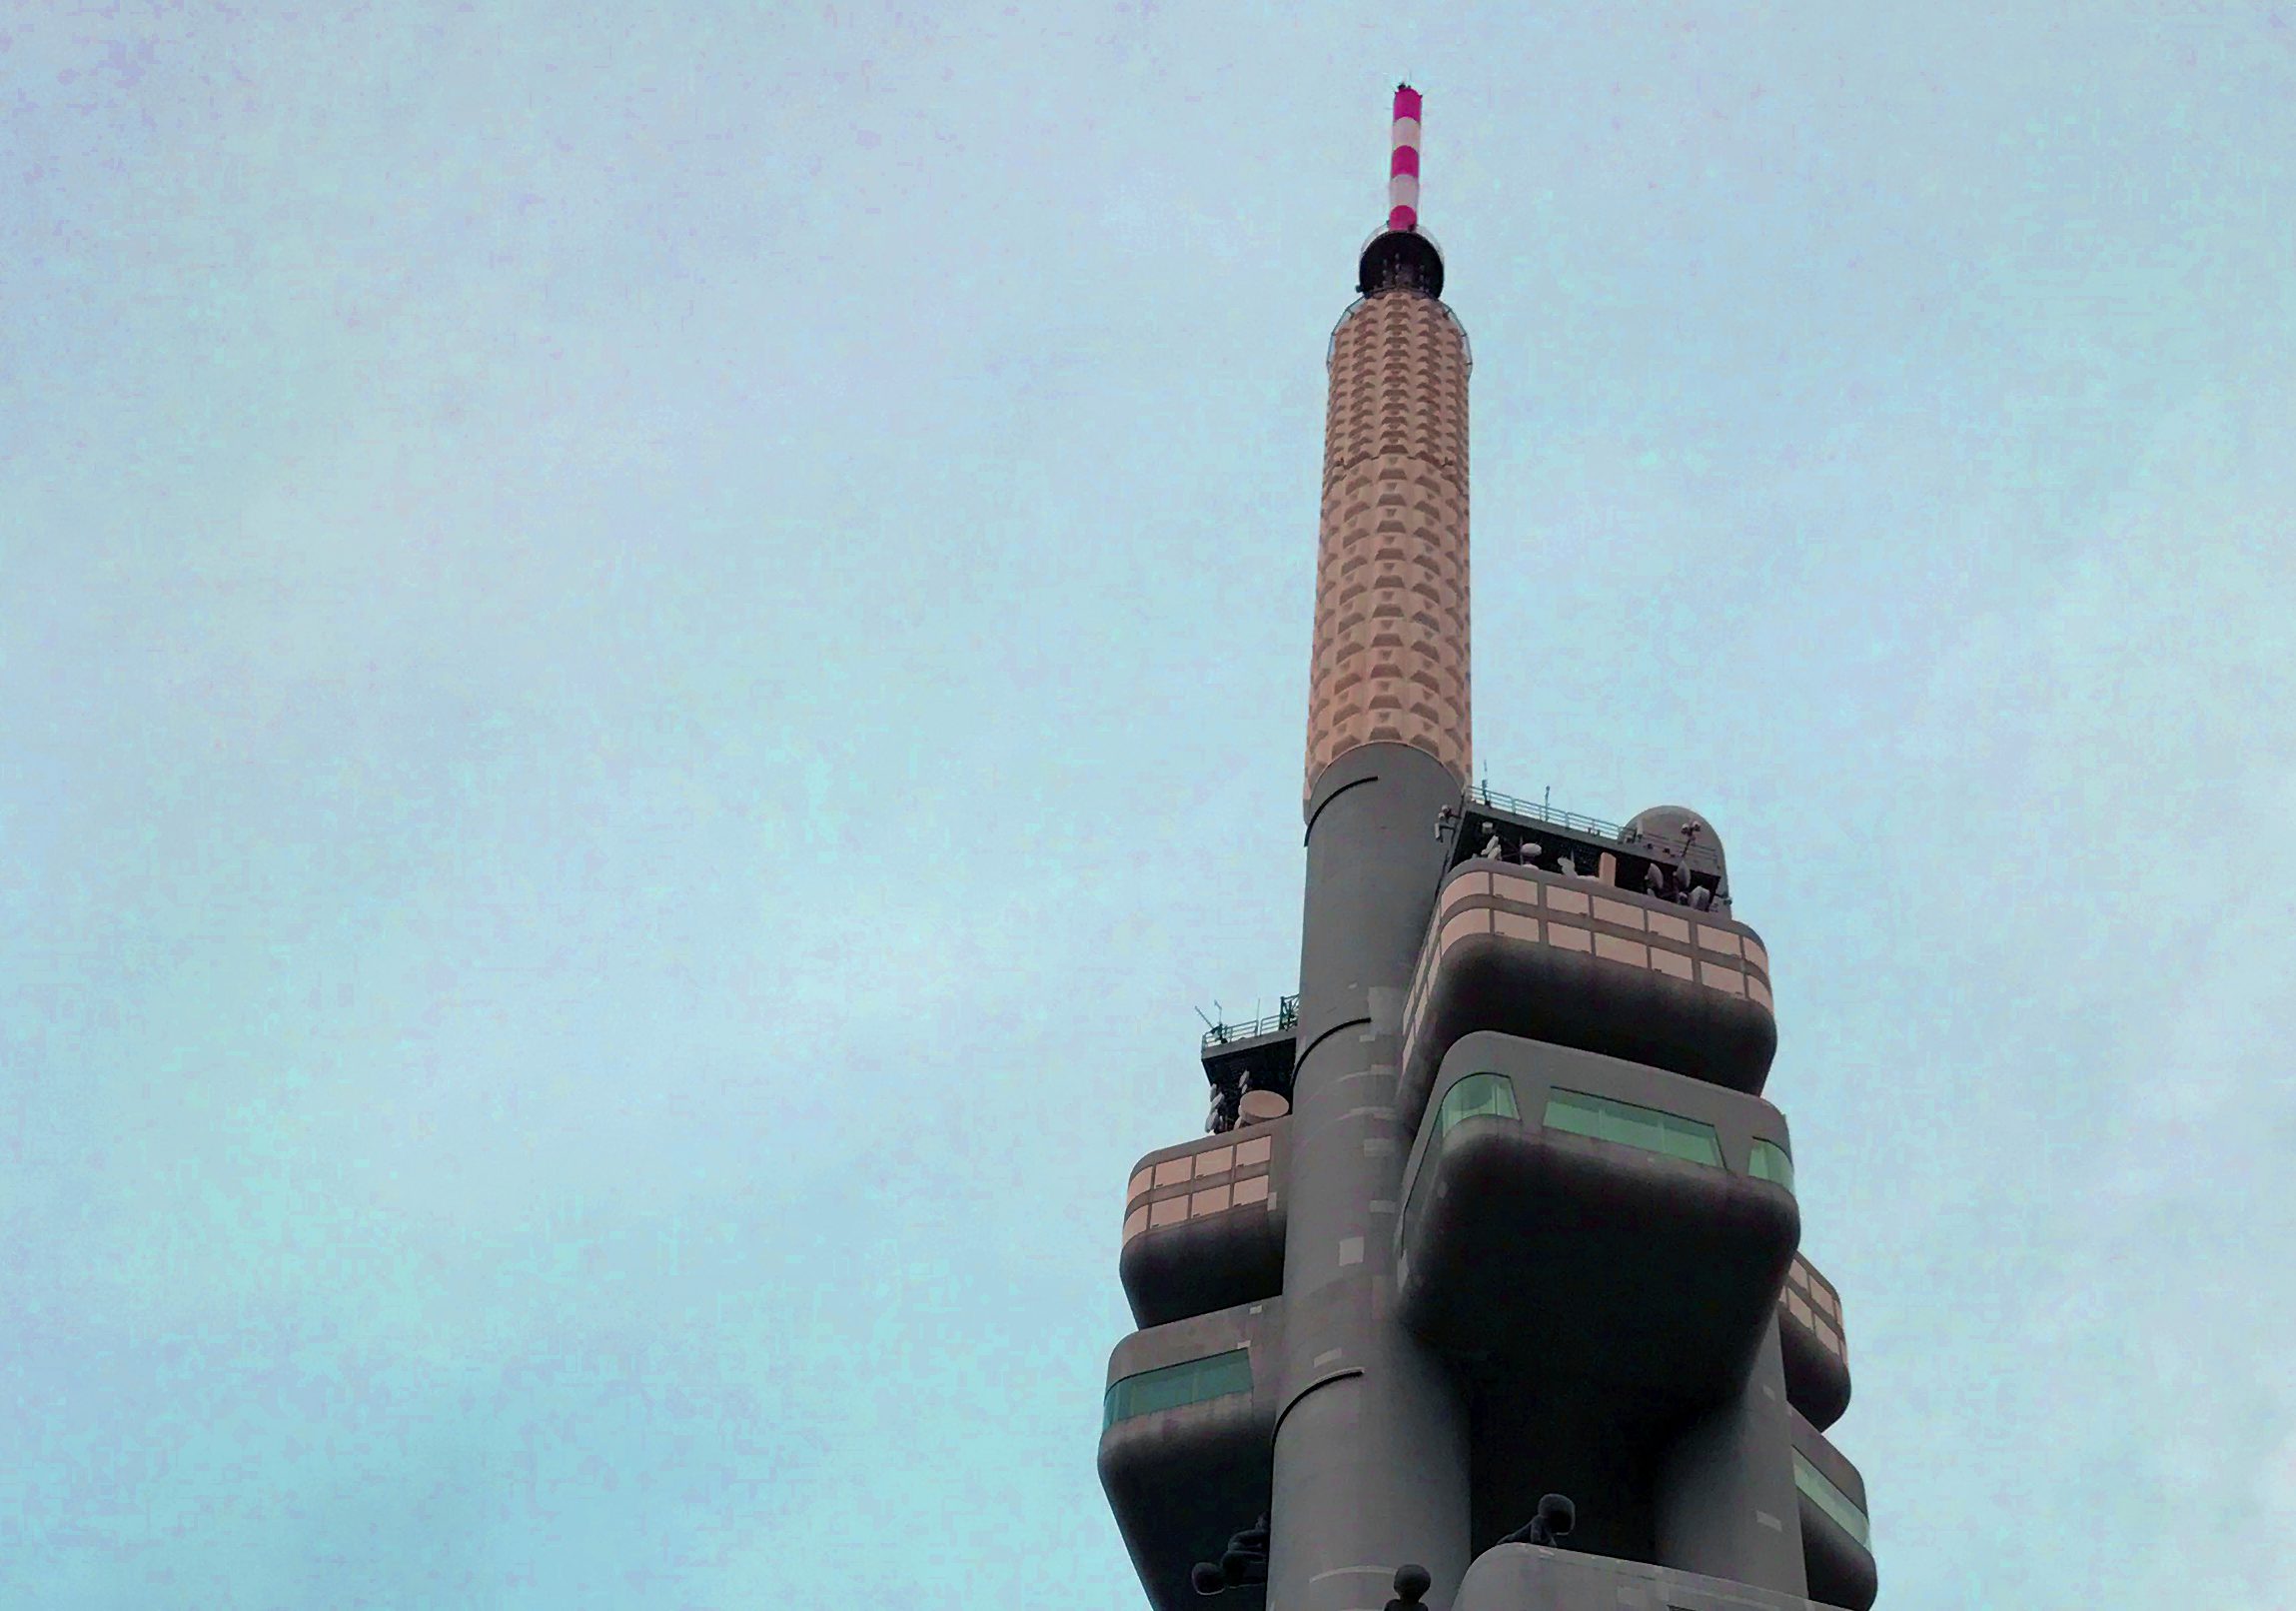 Žižkov TV tower loses its ten crawling baby sculptures